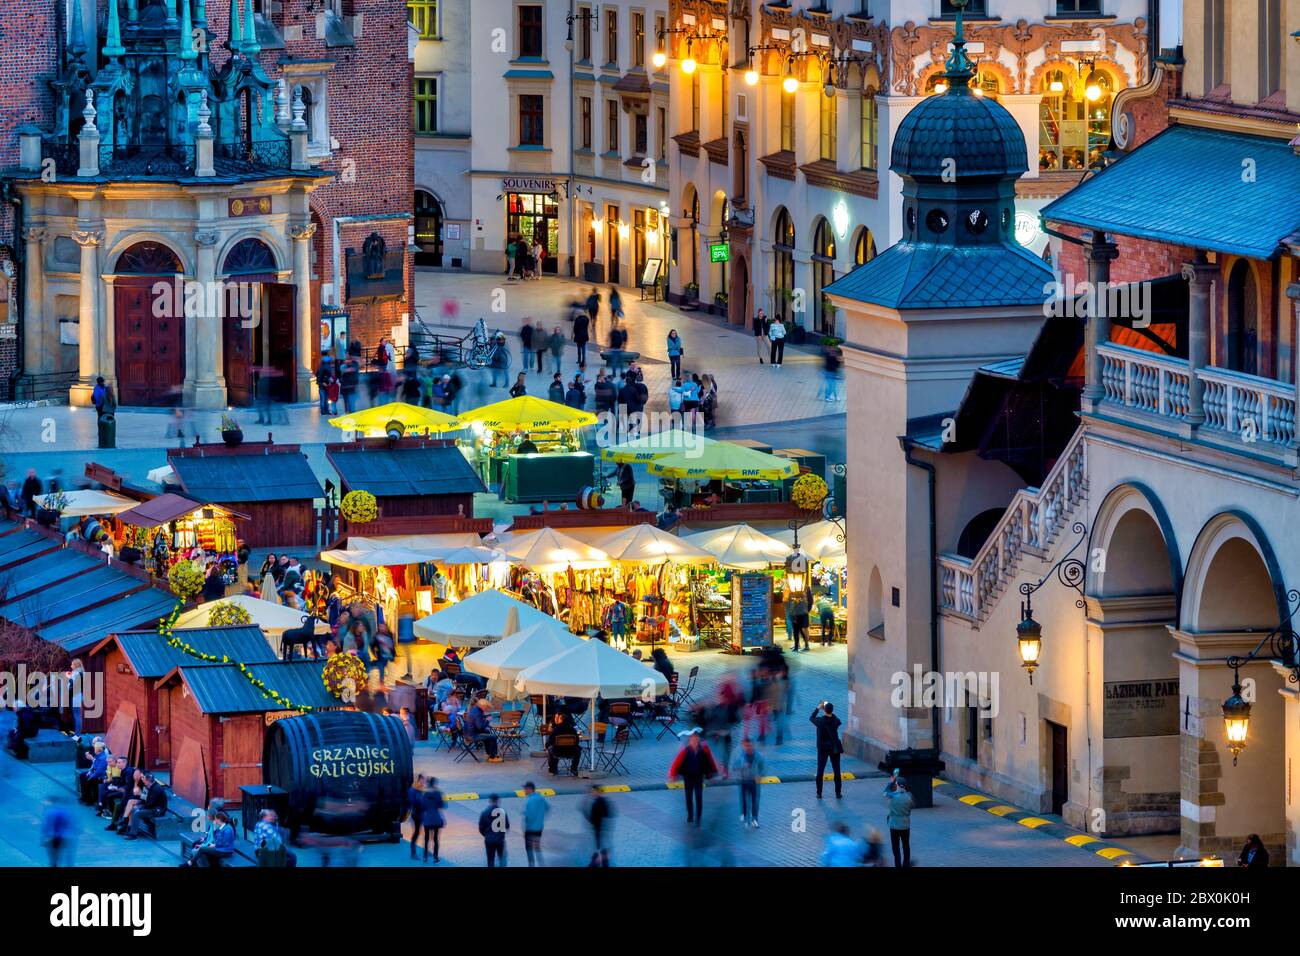 Market in the Main Square, Krakow, Poland Stock Photo